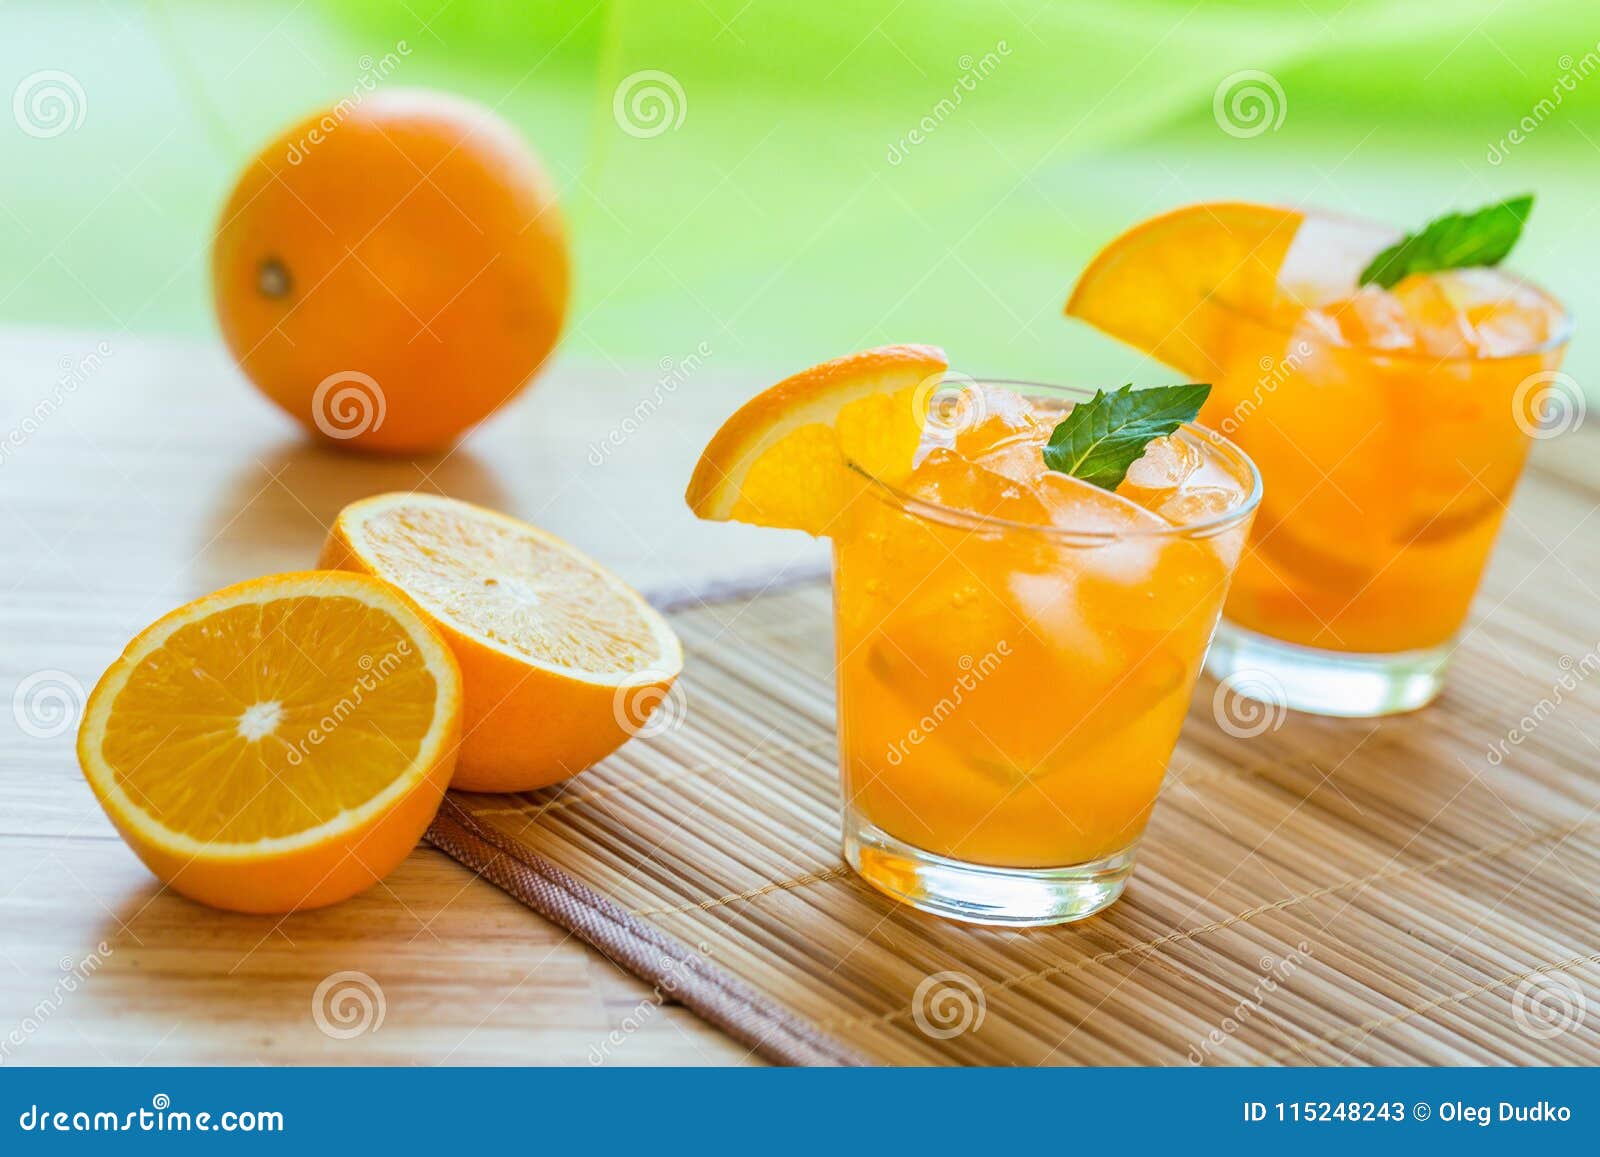 Ice Cold Orange Juice stock image. Image of glass, drink - 115248243